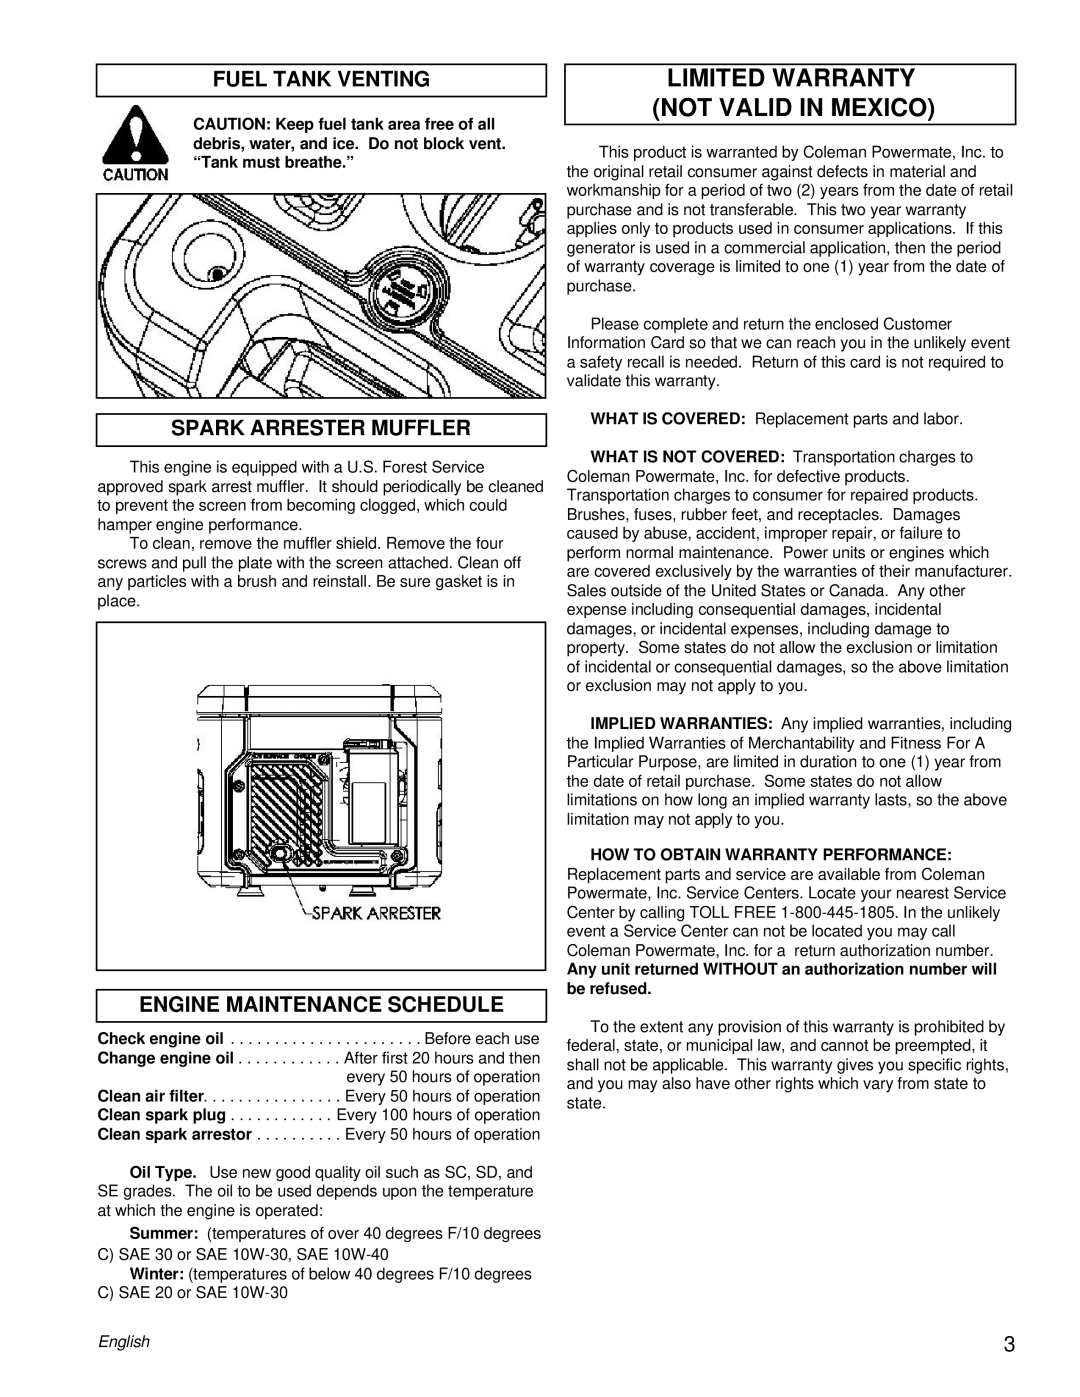 Powermate PM0401853 manual Fuel Tank Venting, Spark Arrester Muffler, Engine Maintenance Schedule, English 